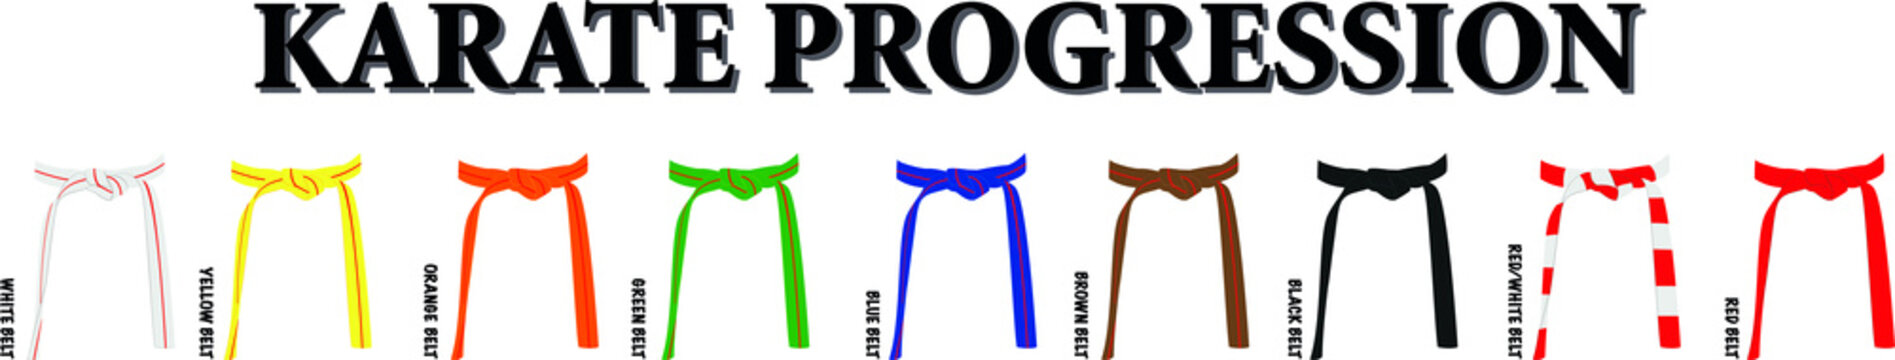 karate belt progression